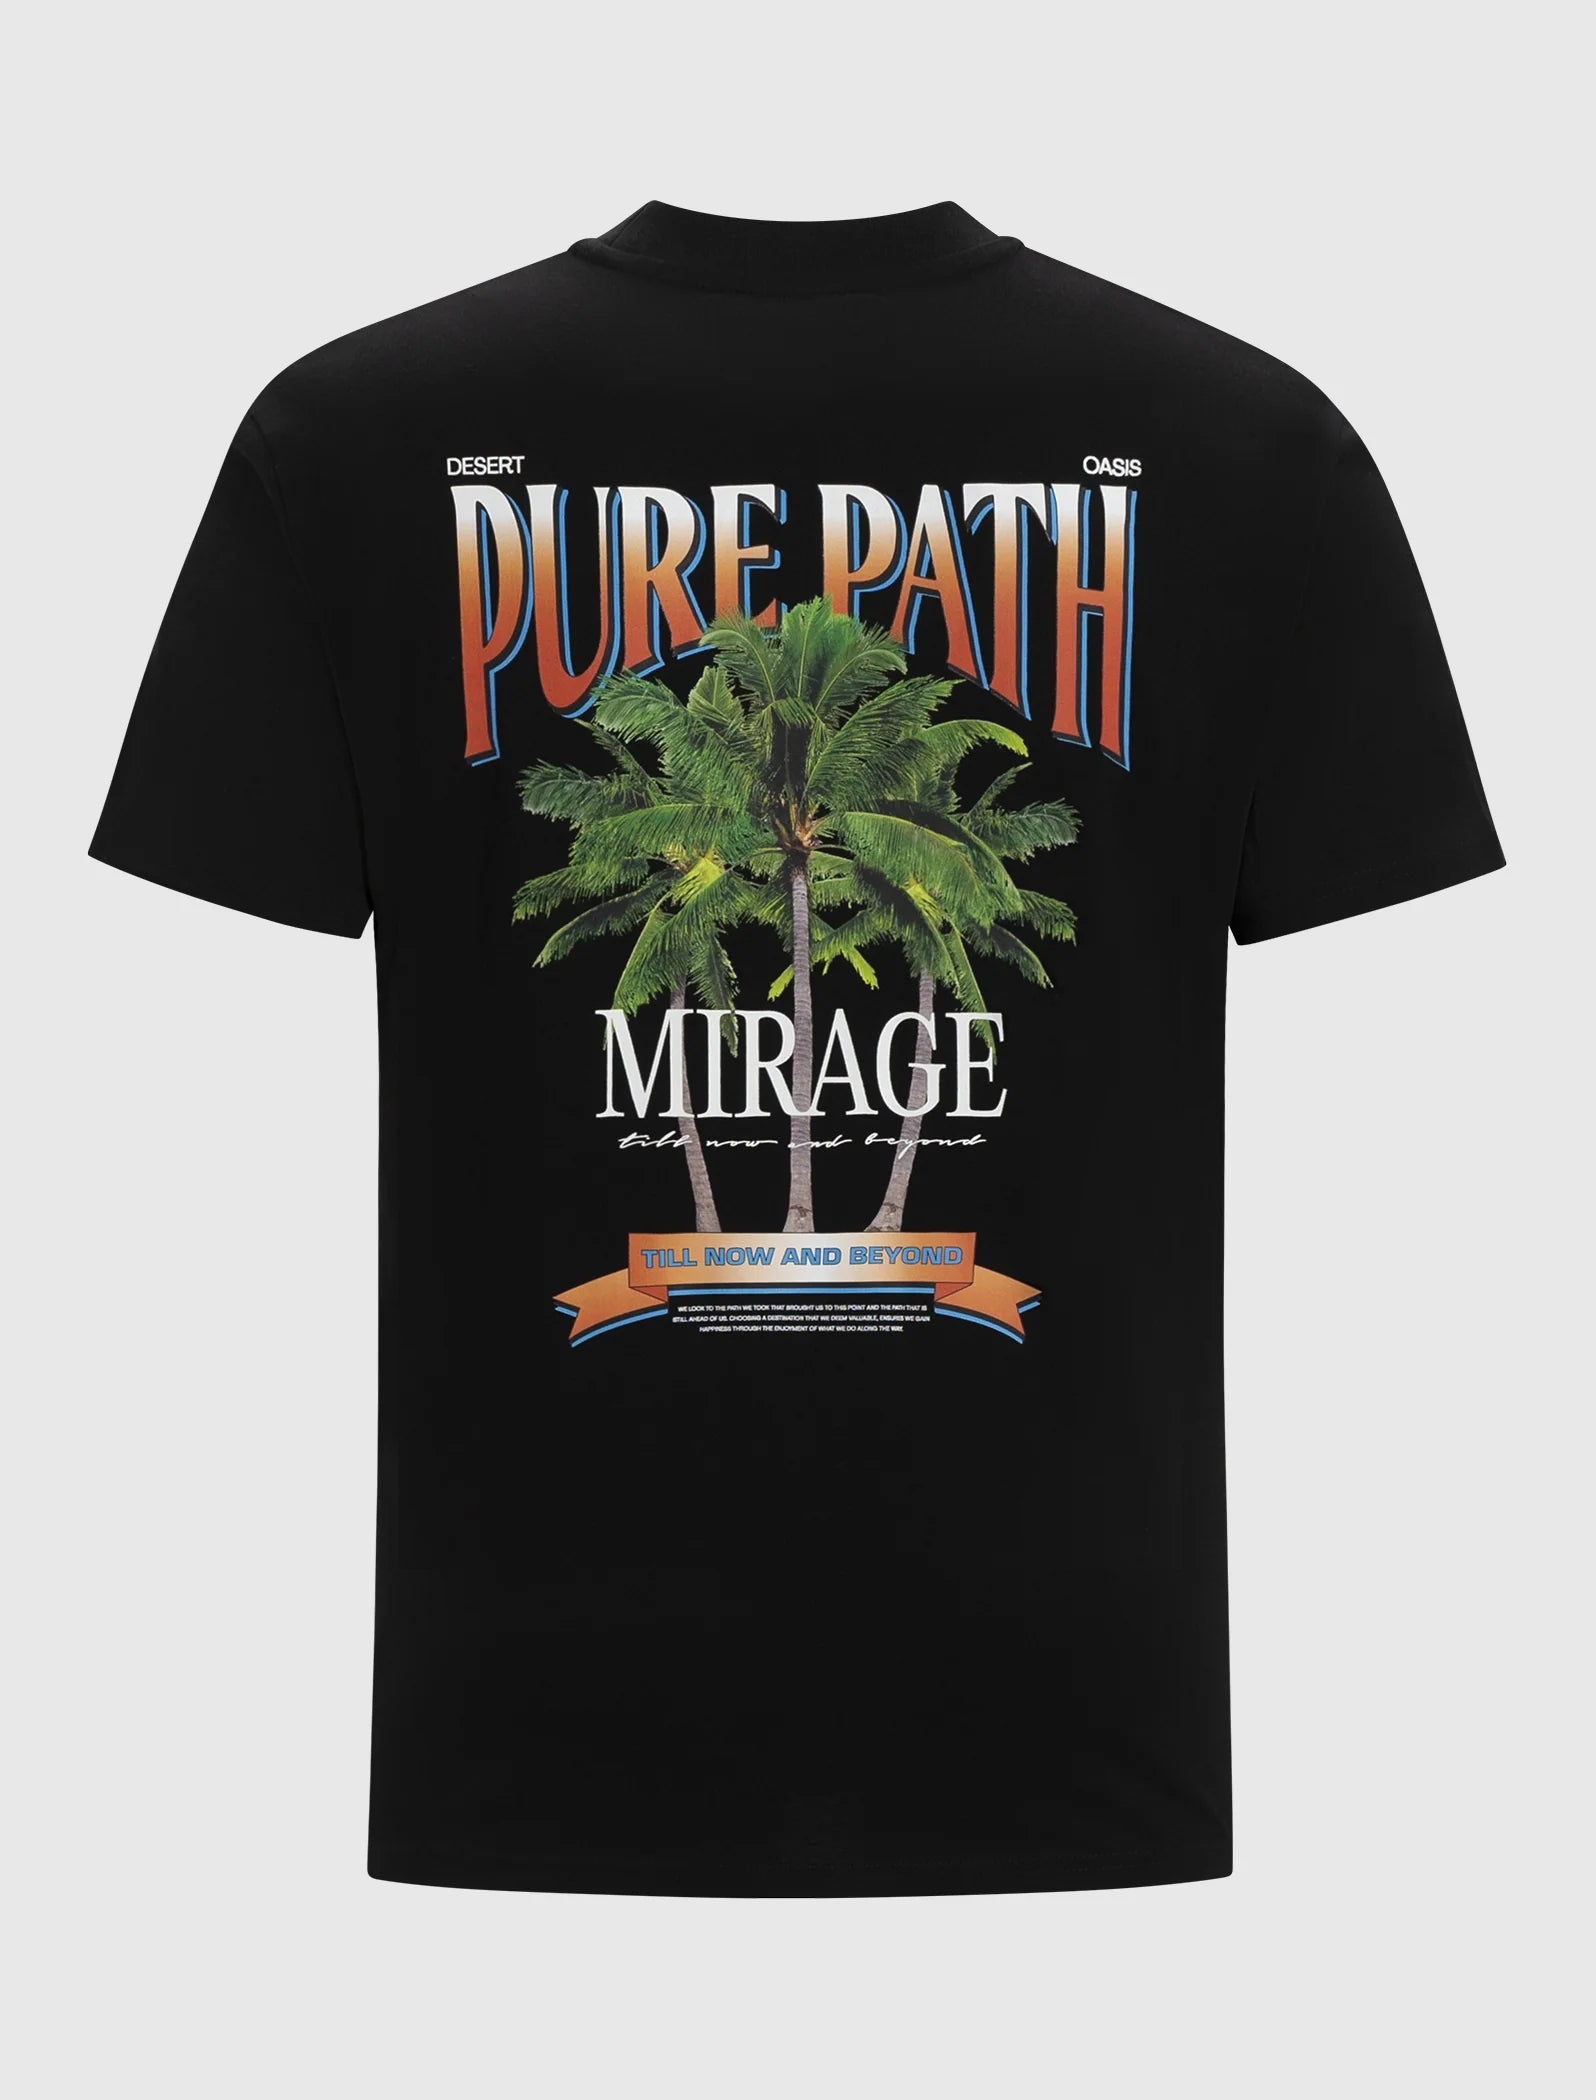 Pure Path Mirage T-shirt